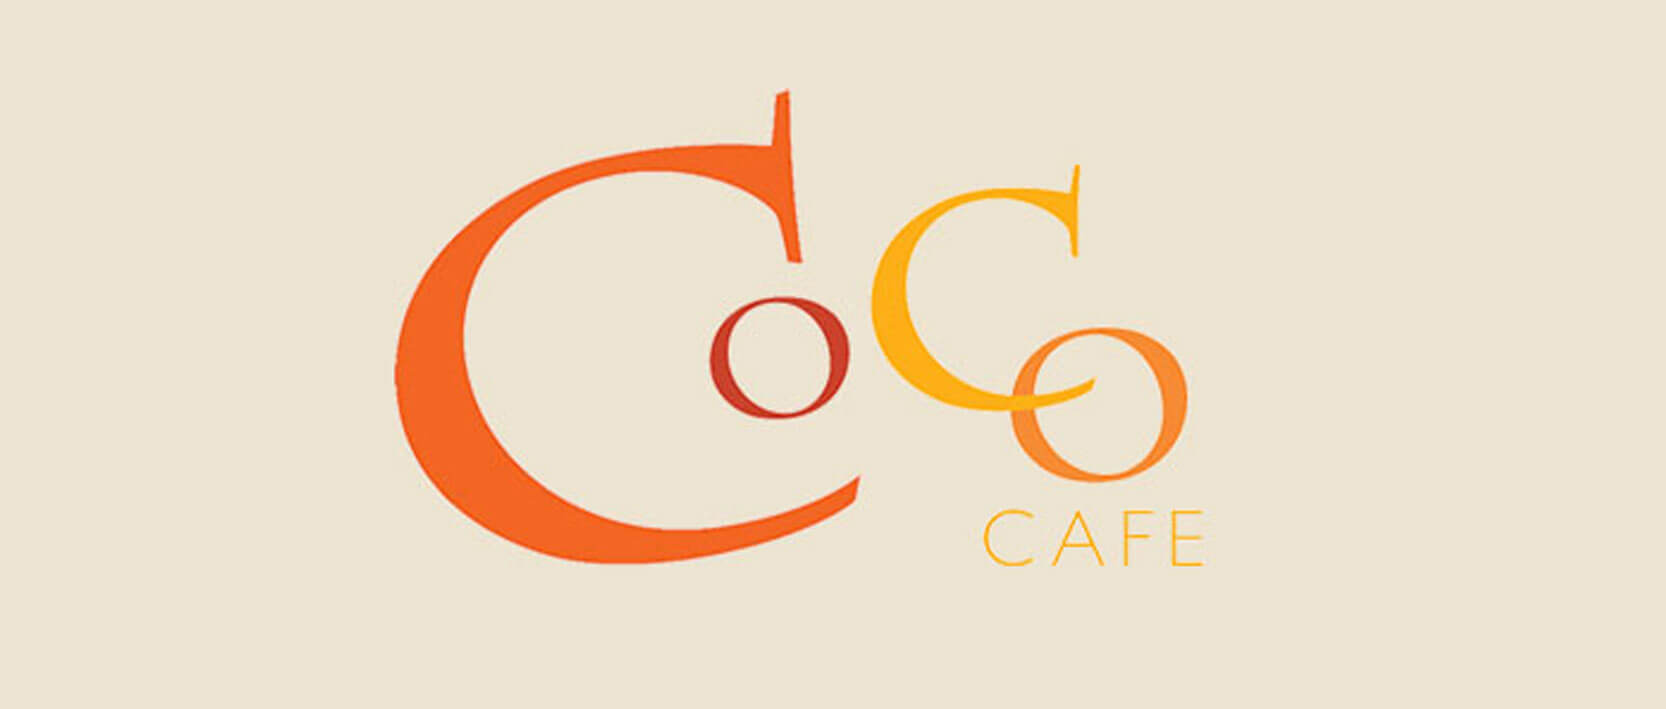 Dreams Punta Cana Resort Restaurants and Bars - Coco Cafe